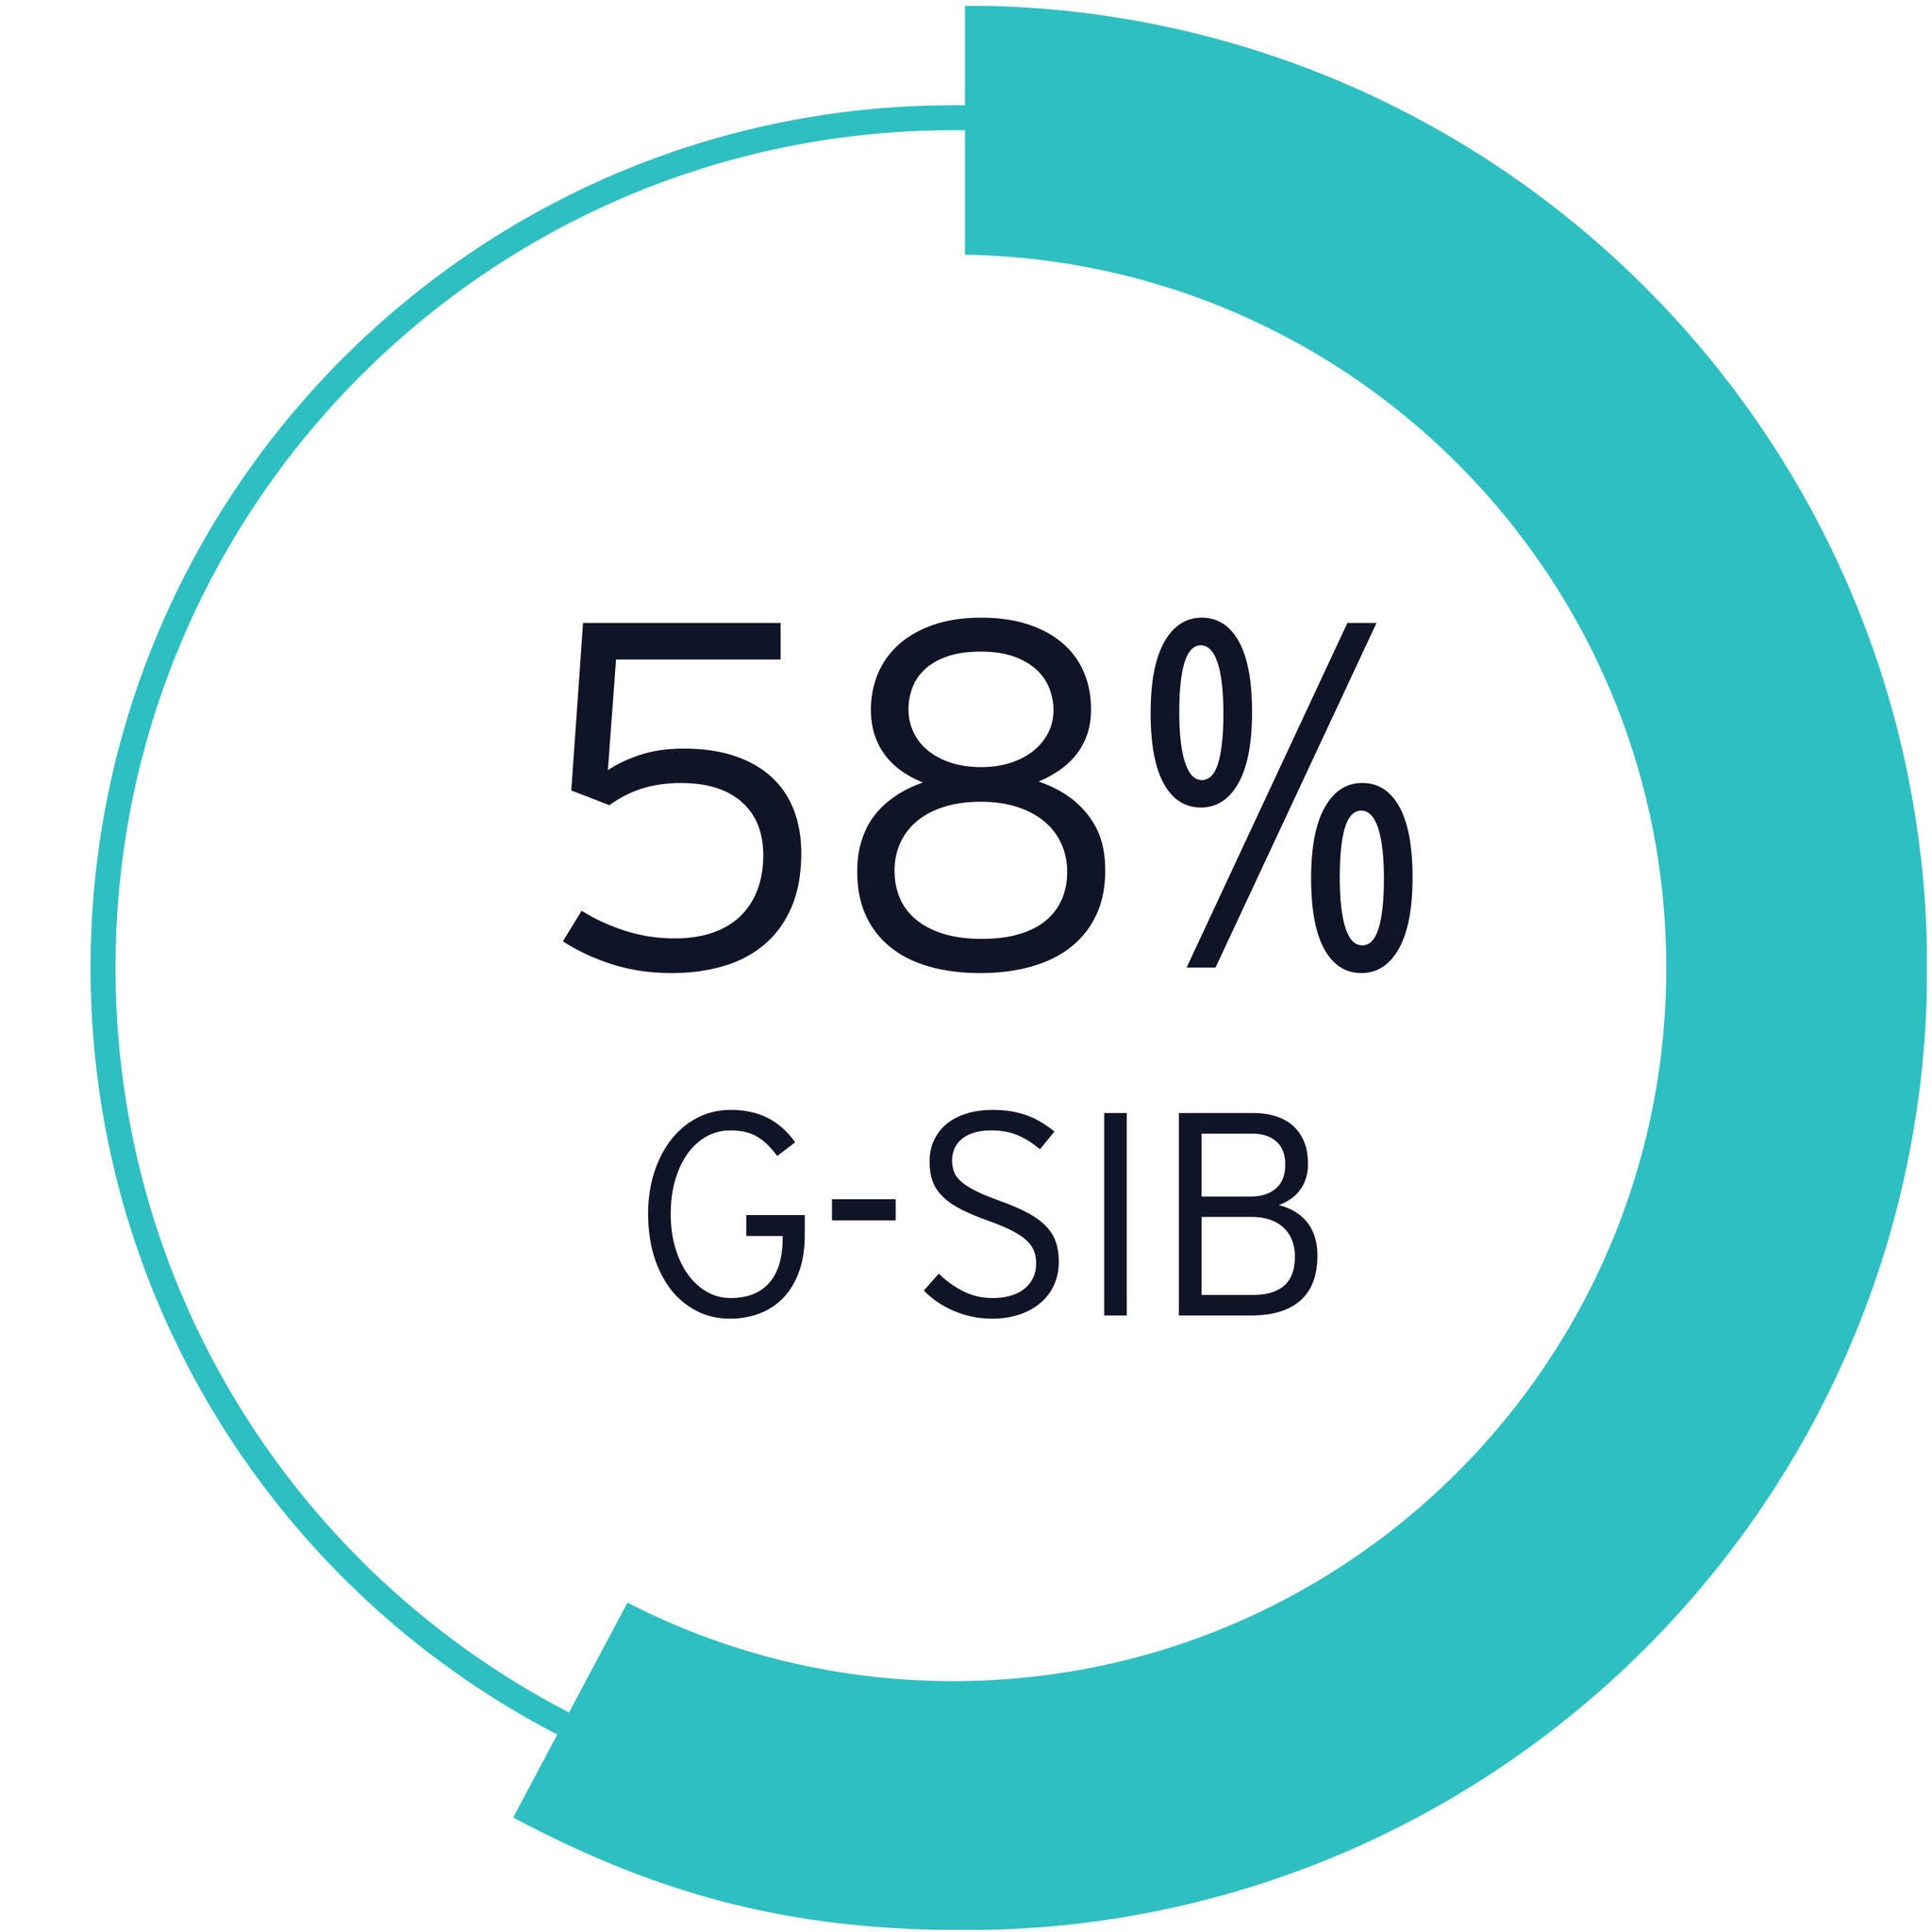 58% g-sib